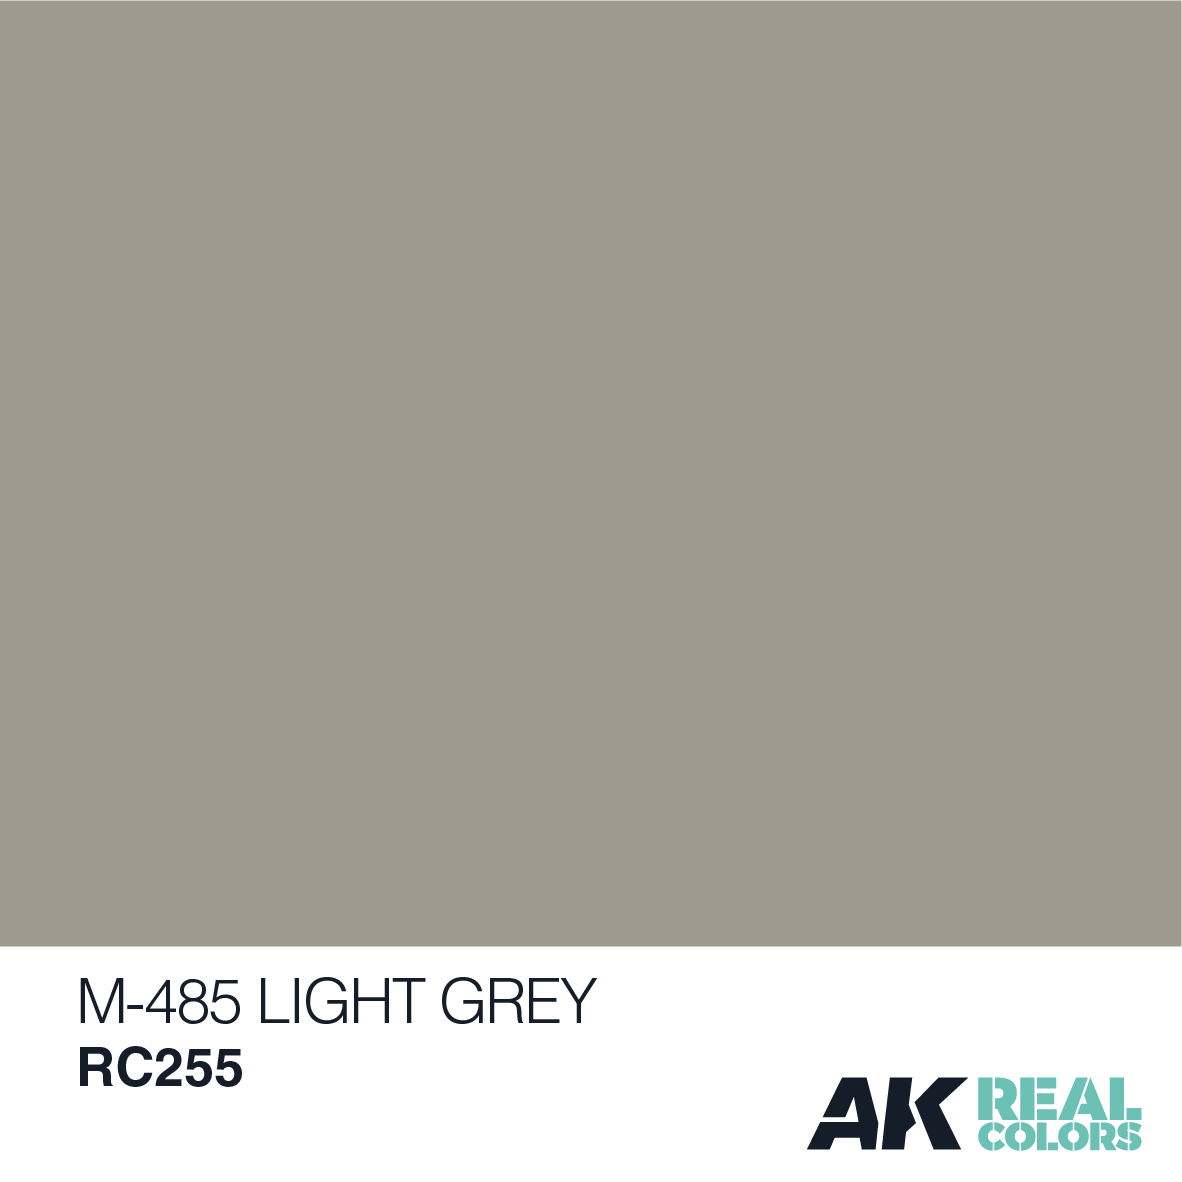 M-485 Light Grey